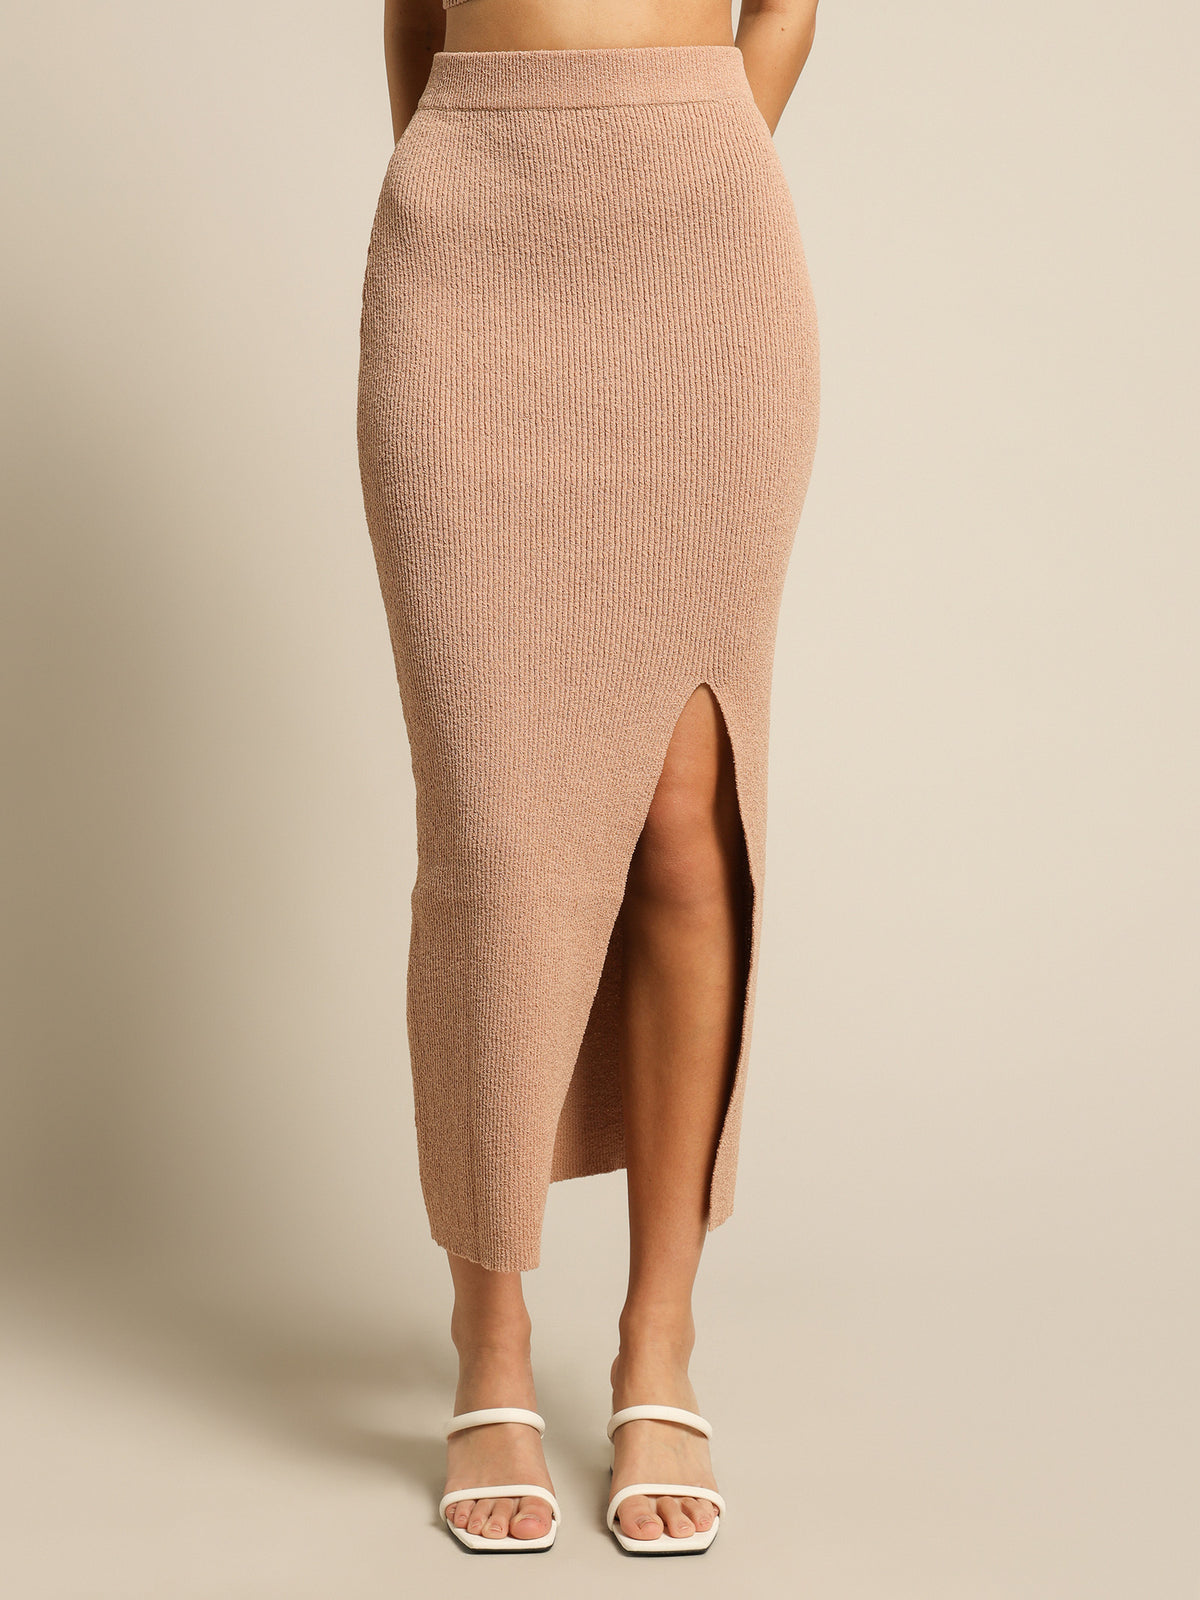 Krista Knit Skirt in Peach